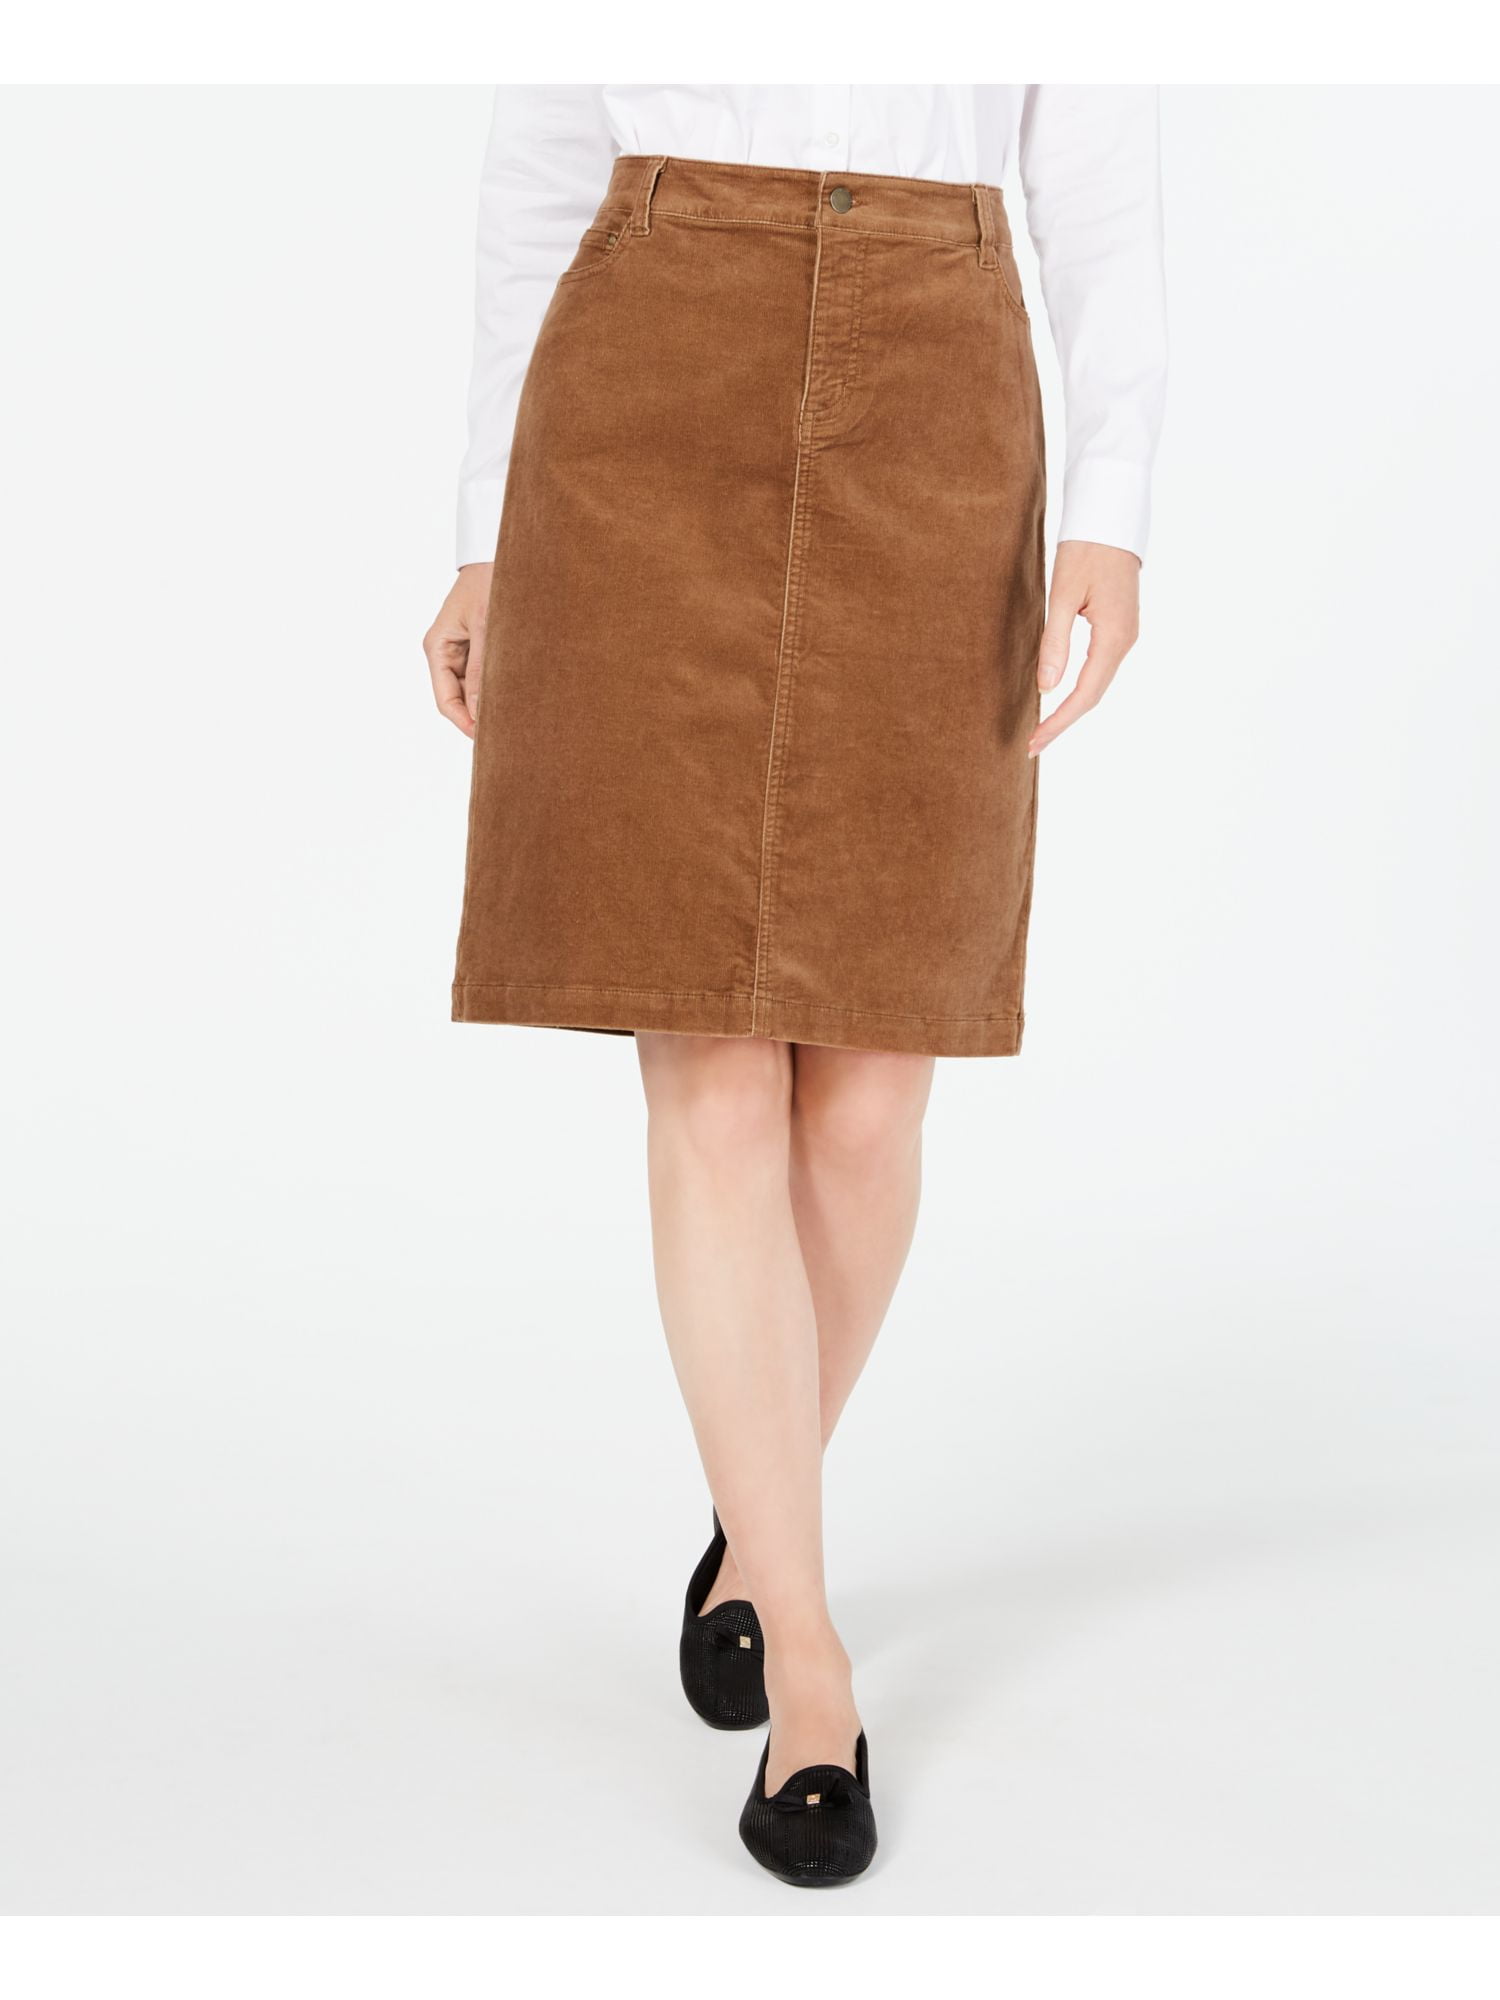 KIDS FASHION Skirts Corduroy discount 93% Brown Zara casual skirt 